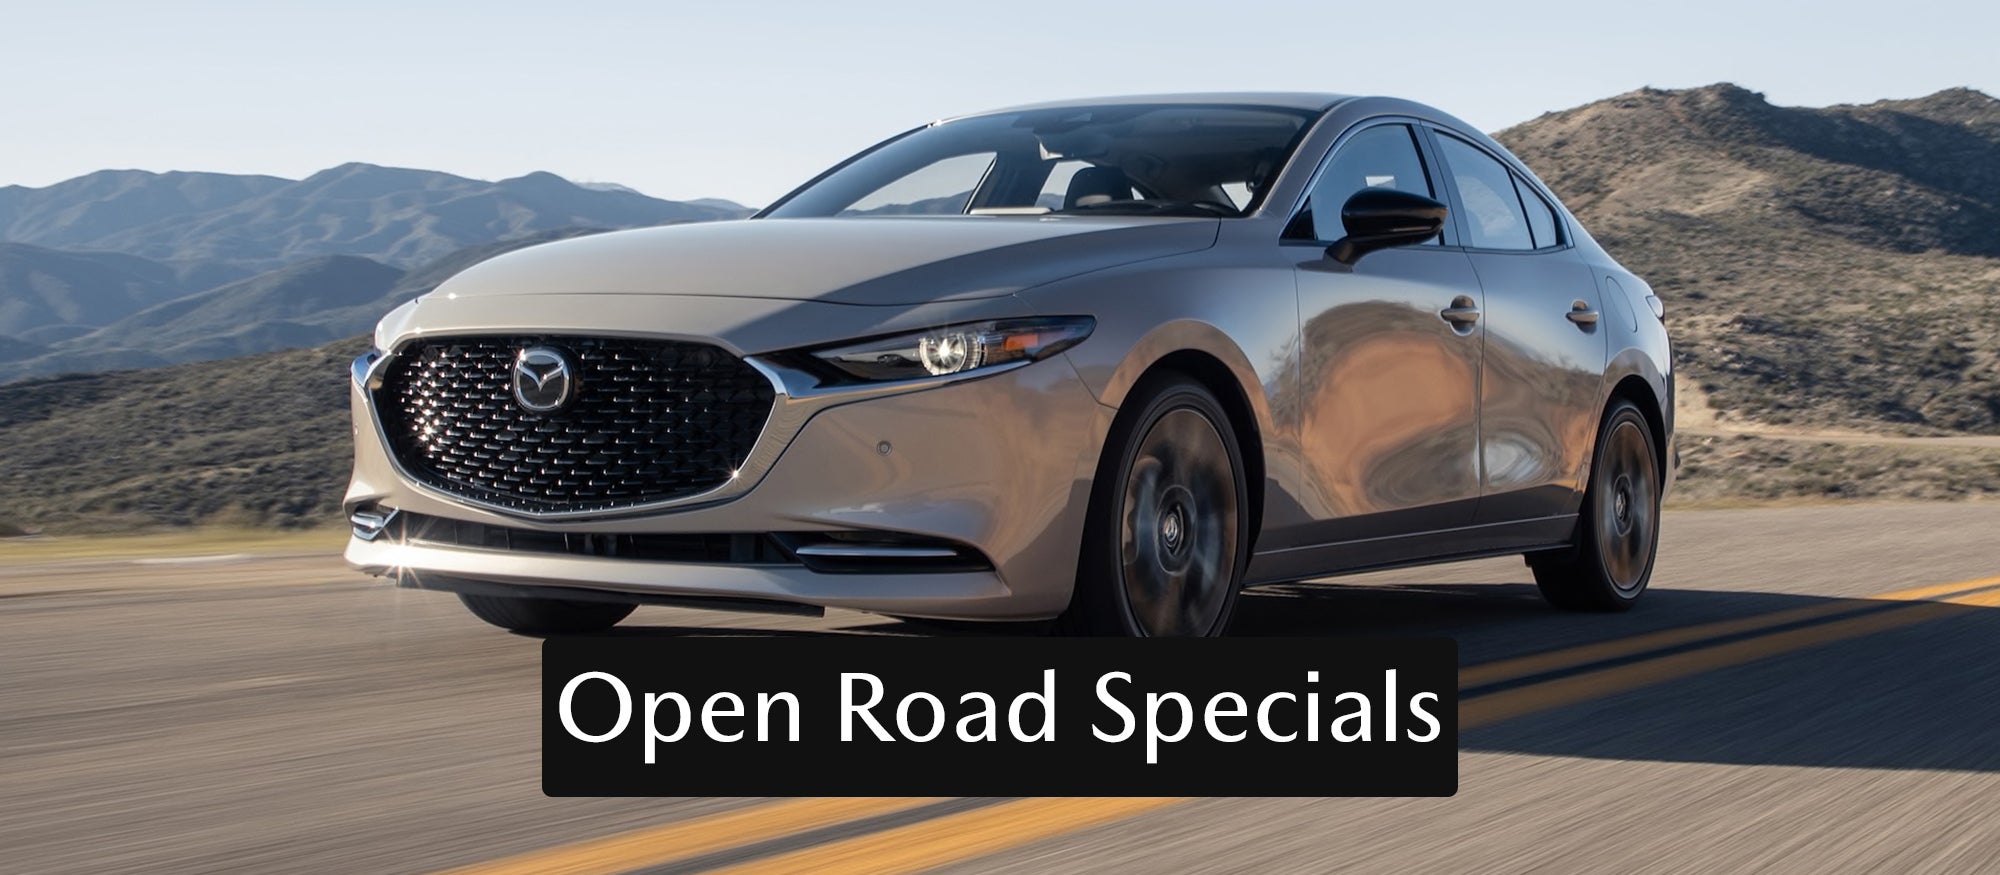 Open Road Specials | Open Road Mazda of Morristown in Morristown NJ